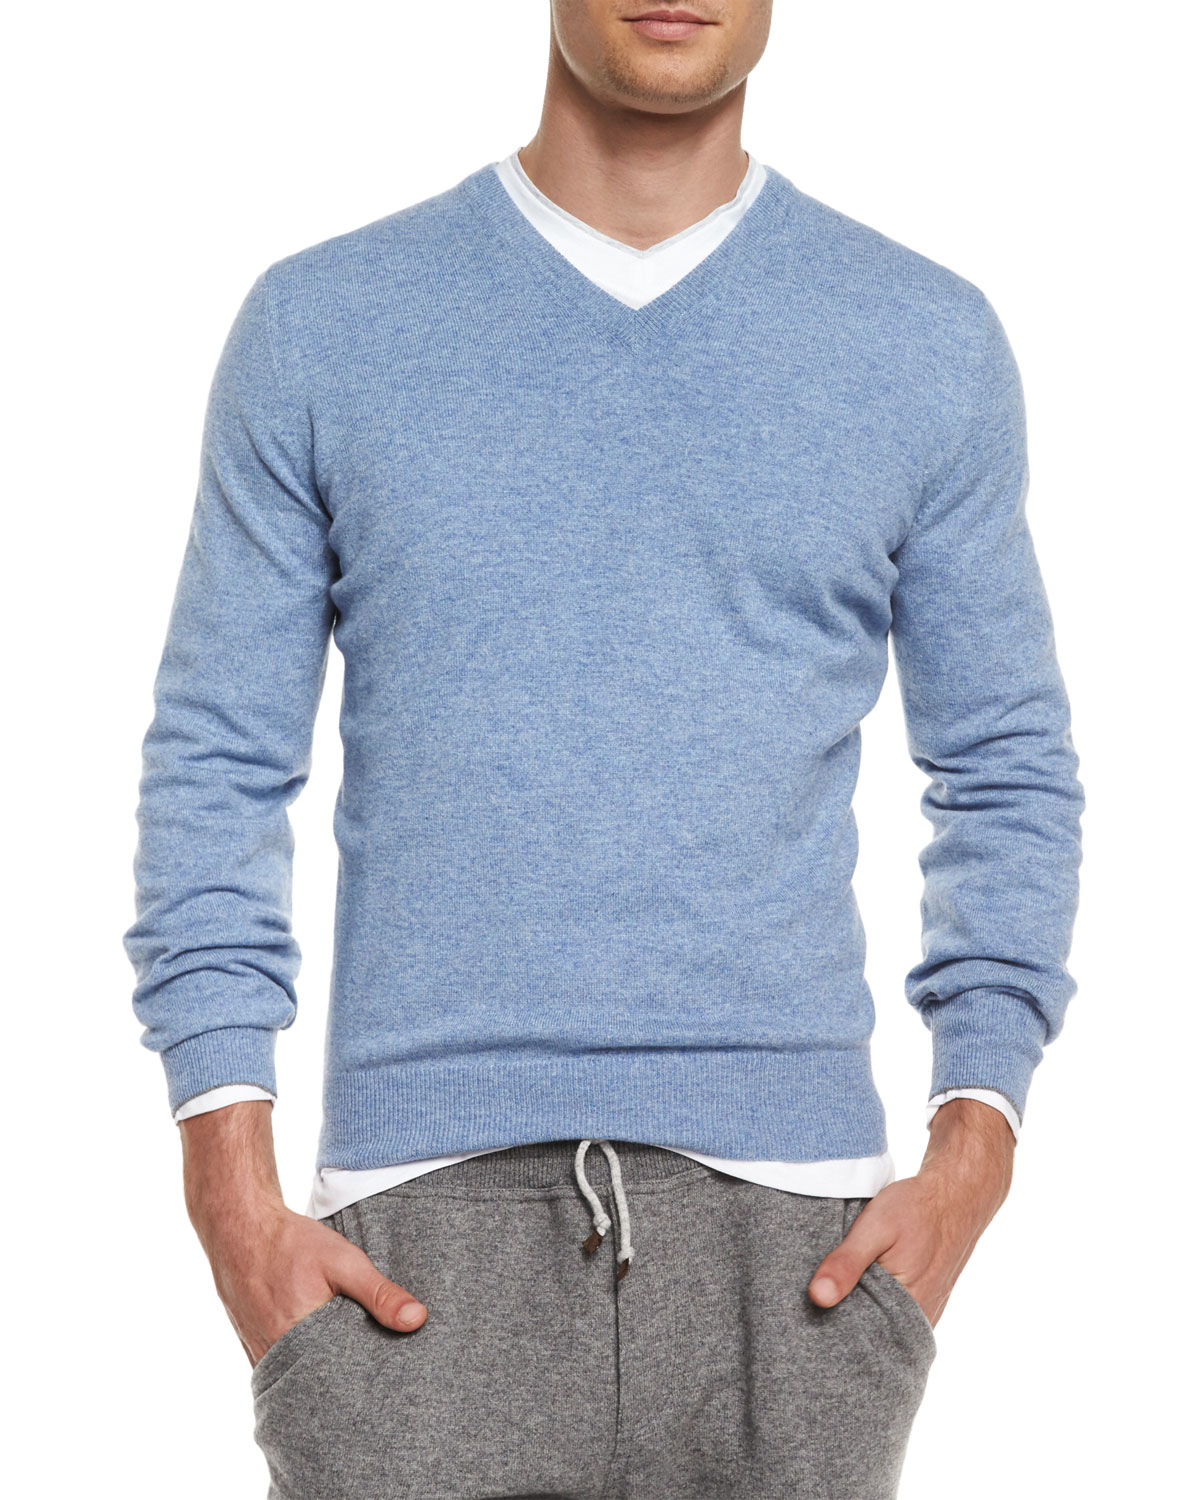 Lyst - Brunello Cucinelli Cashmere V-neck Sweater in Blue for Men